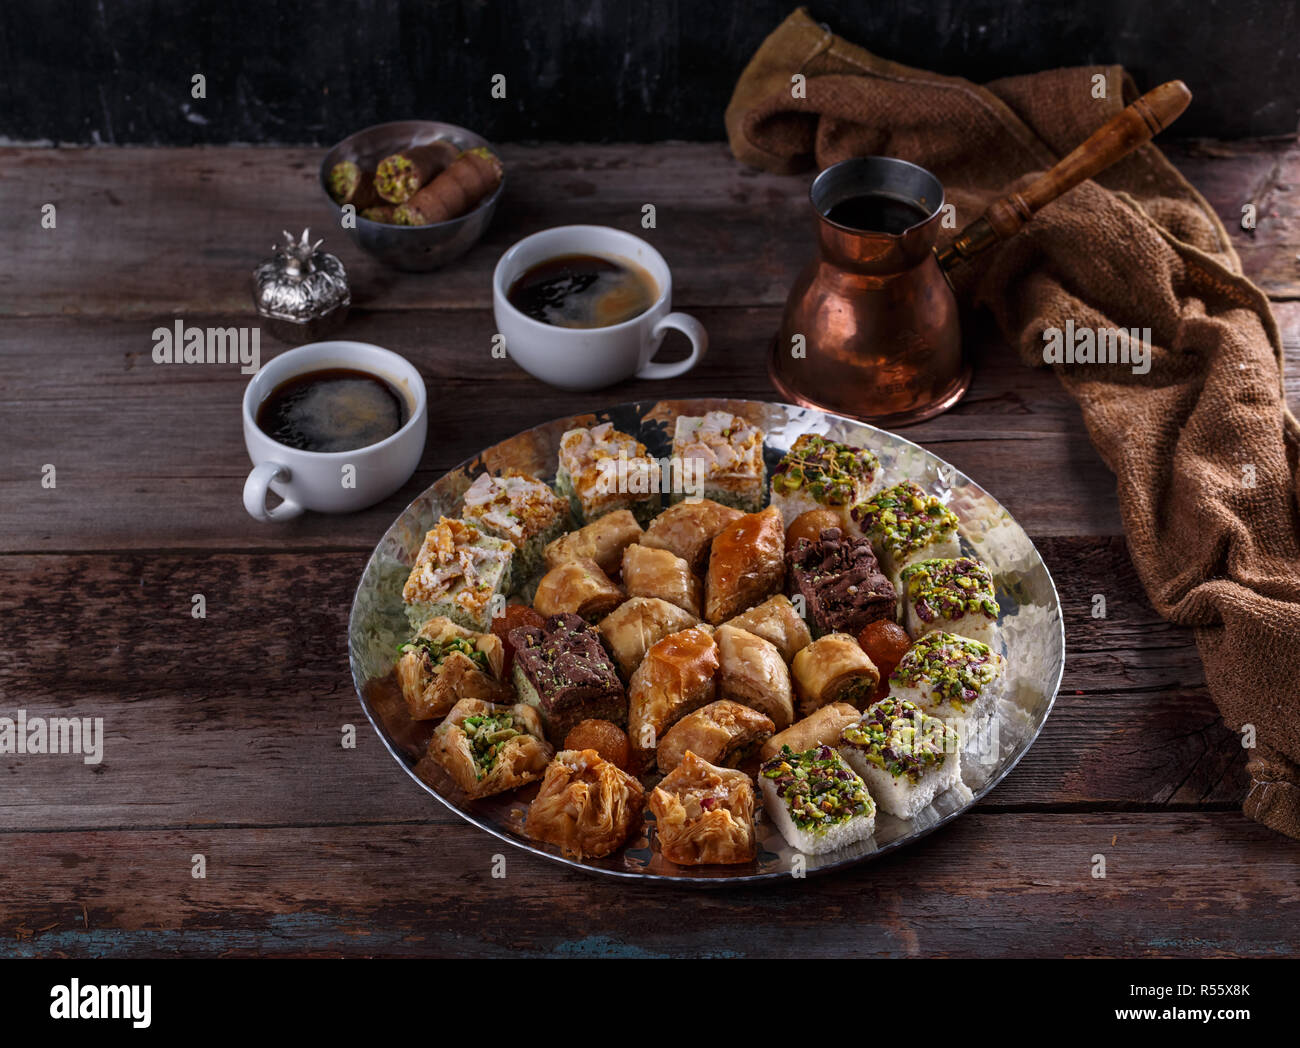 Arabic Baklava with coffee on silver tray, copy space Stock Photo - Alamy